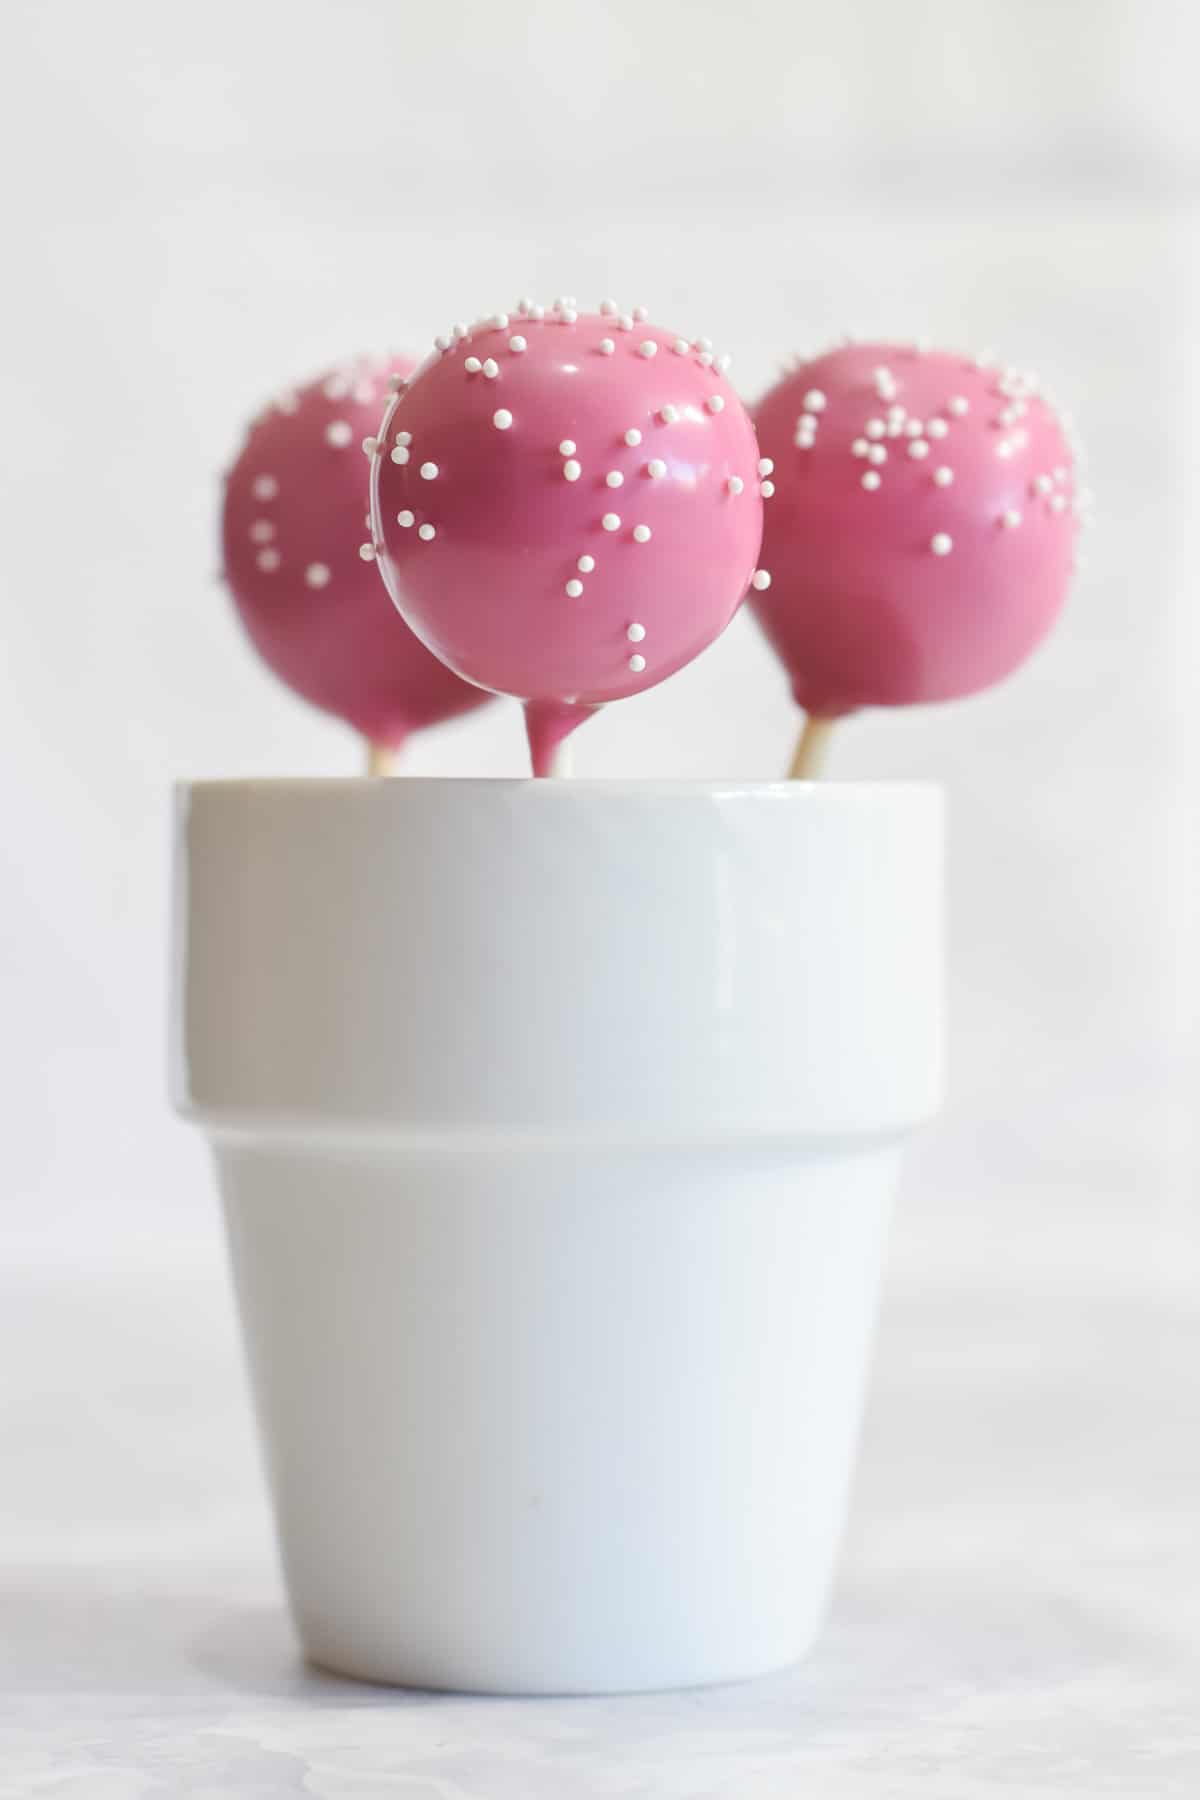 Pink Starbucks copycat vanilla birthday cake pops with white mini pearl sprinkles in cup